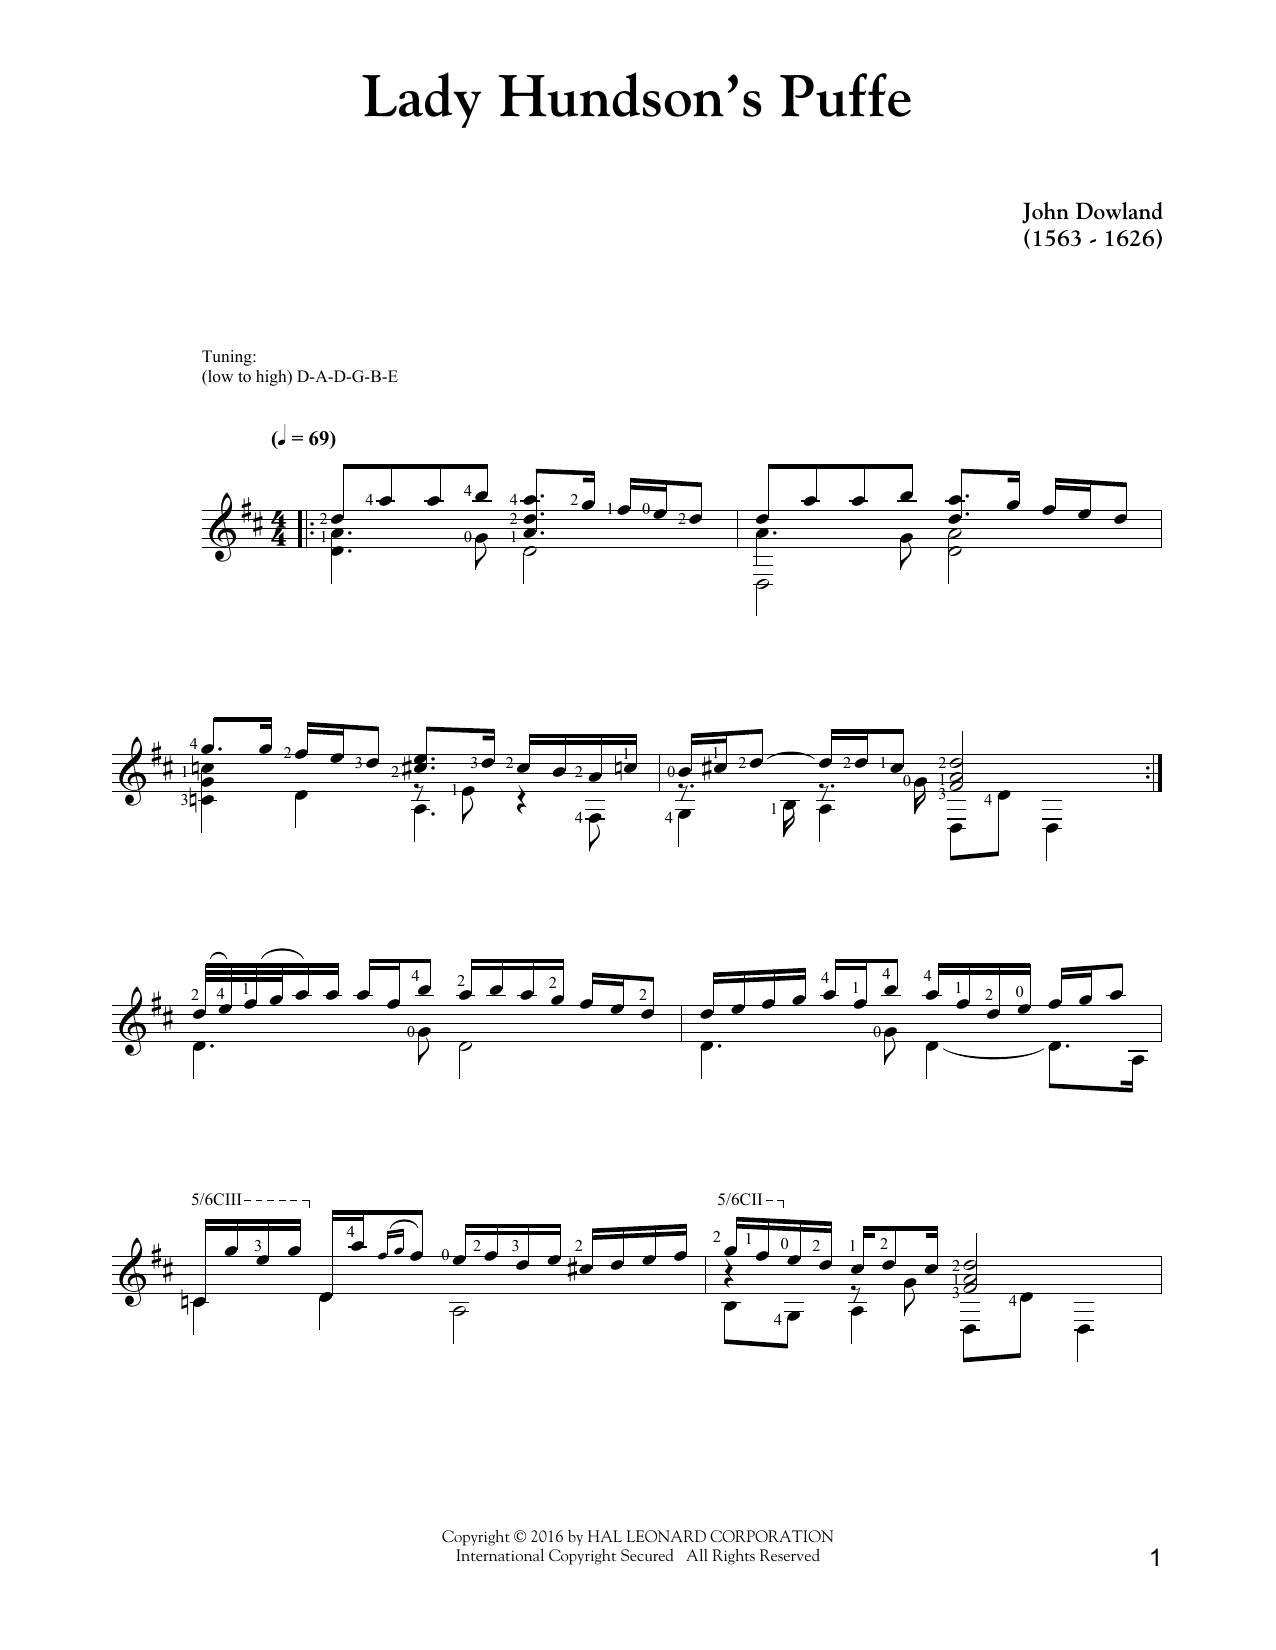 John Dowland Lady Hunsdon's Puffe Sheet Music Notes & Chords for Guitar Tab - Download or Print PDF